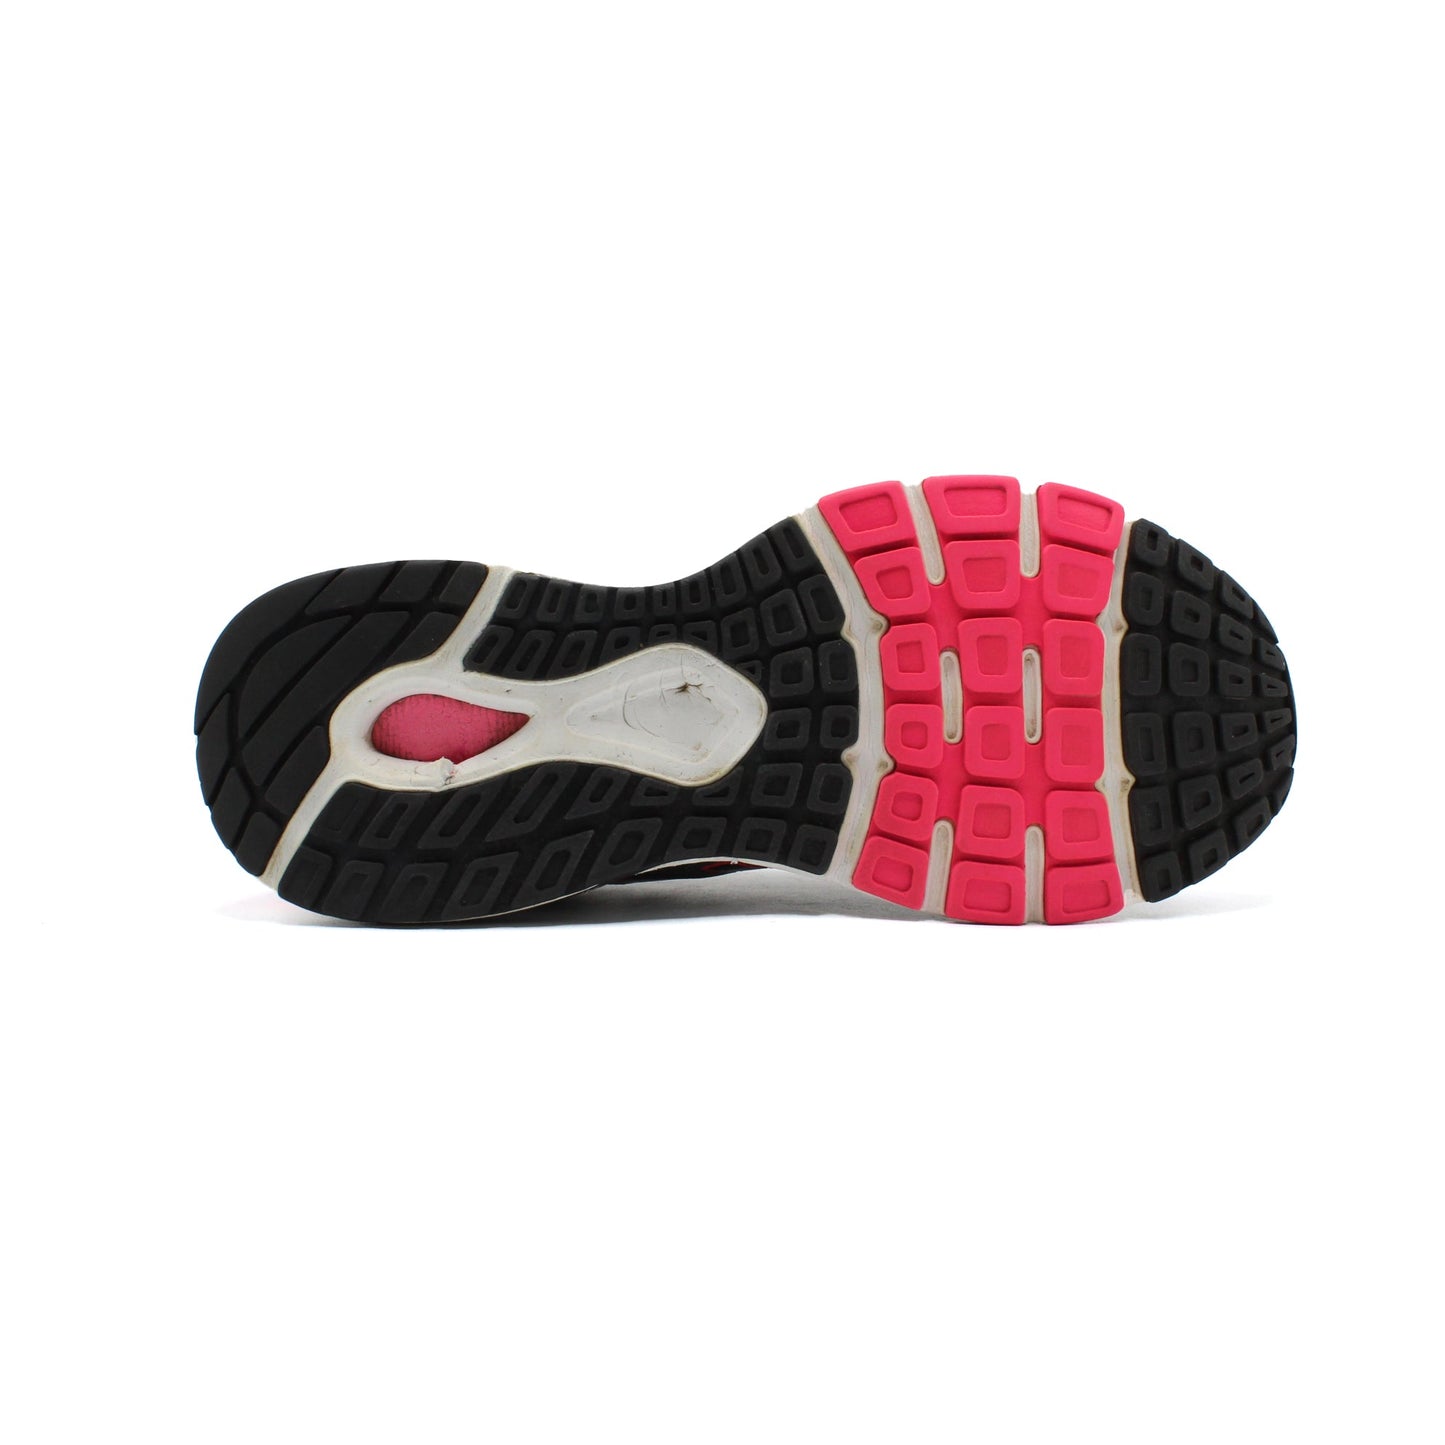 New Balance 560v7 Gunmetal Pink Running Shoe